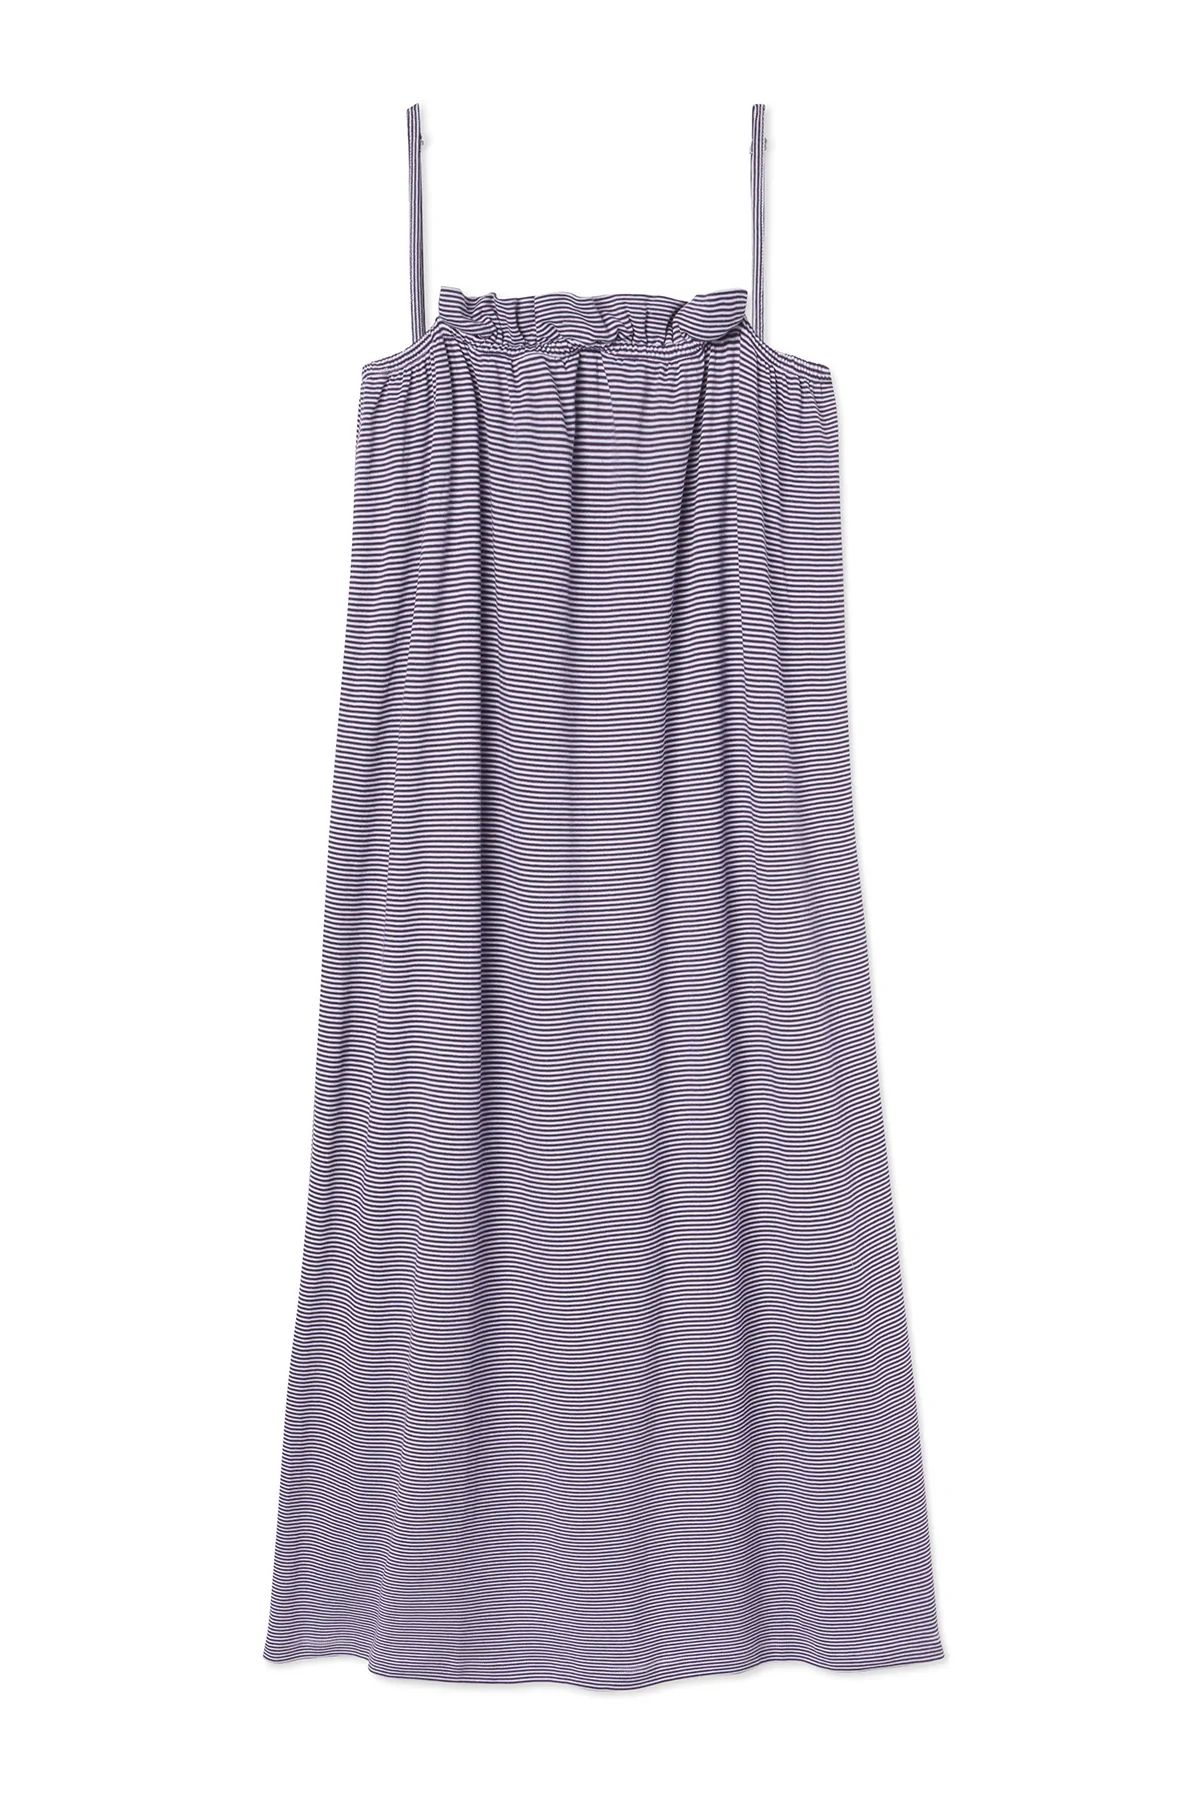 Pima Ruffle Midi Nightgown in Elderberry | LAKE Pajamas